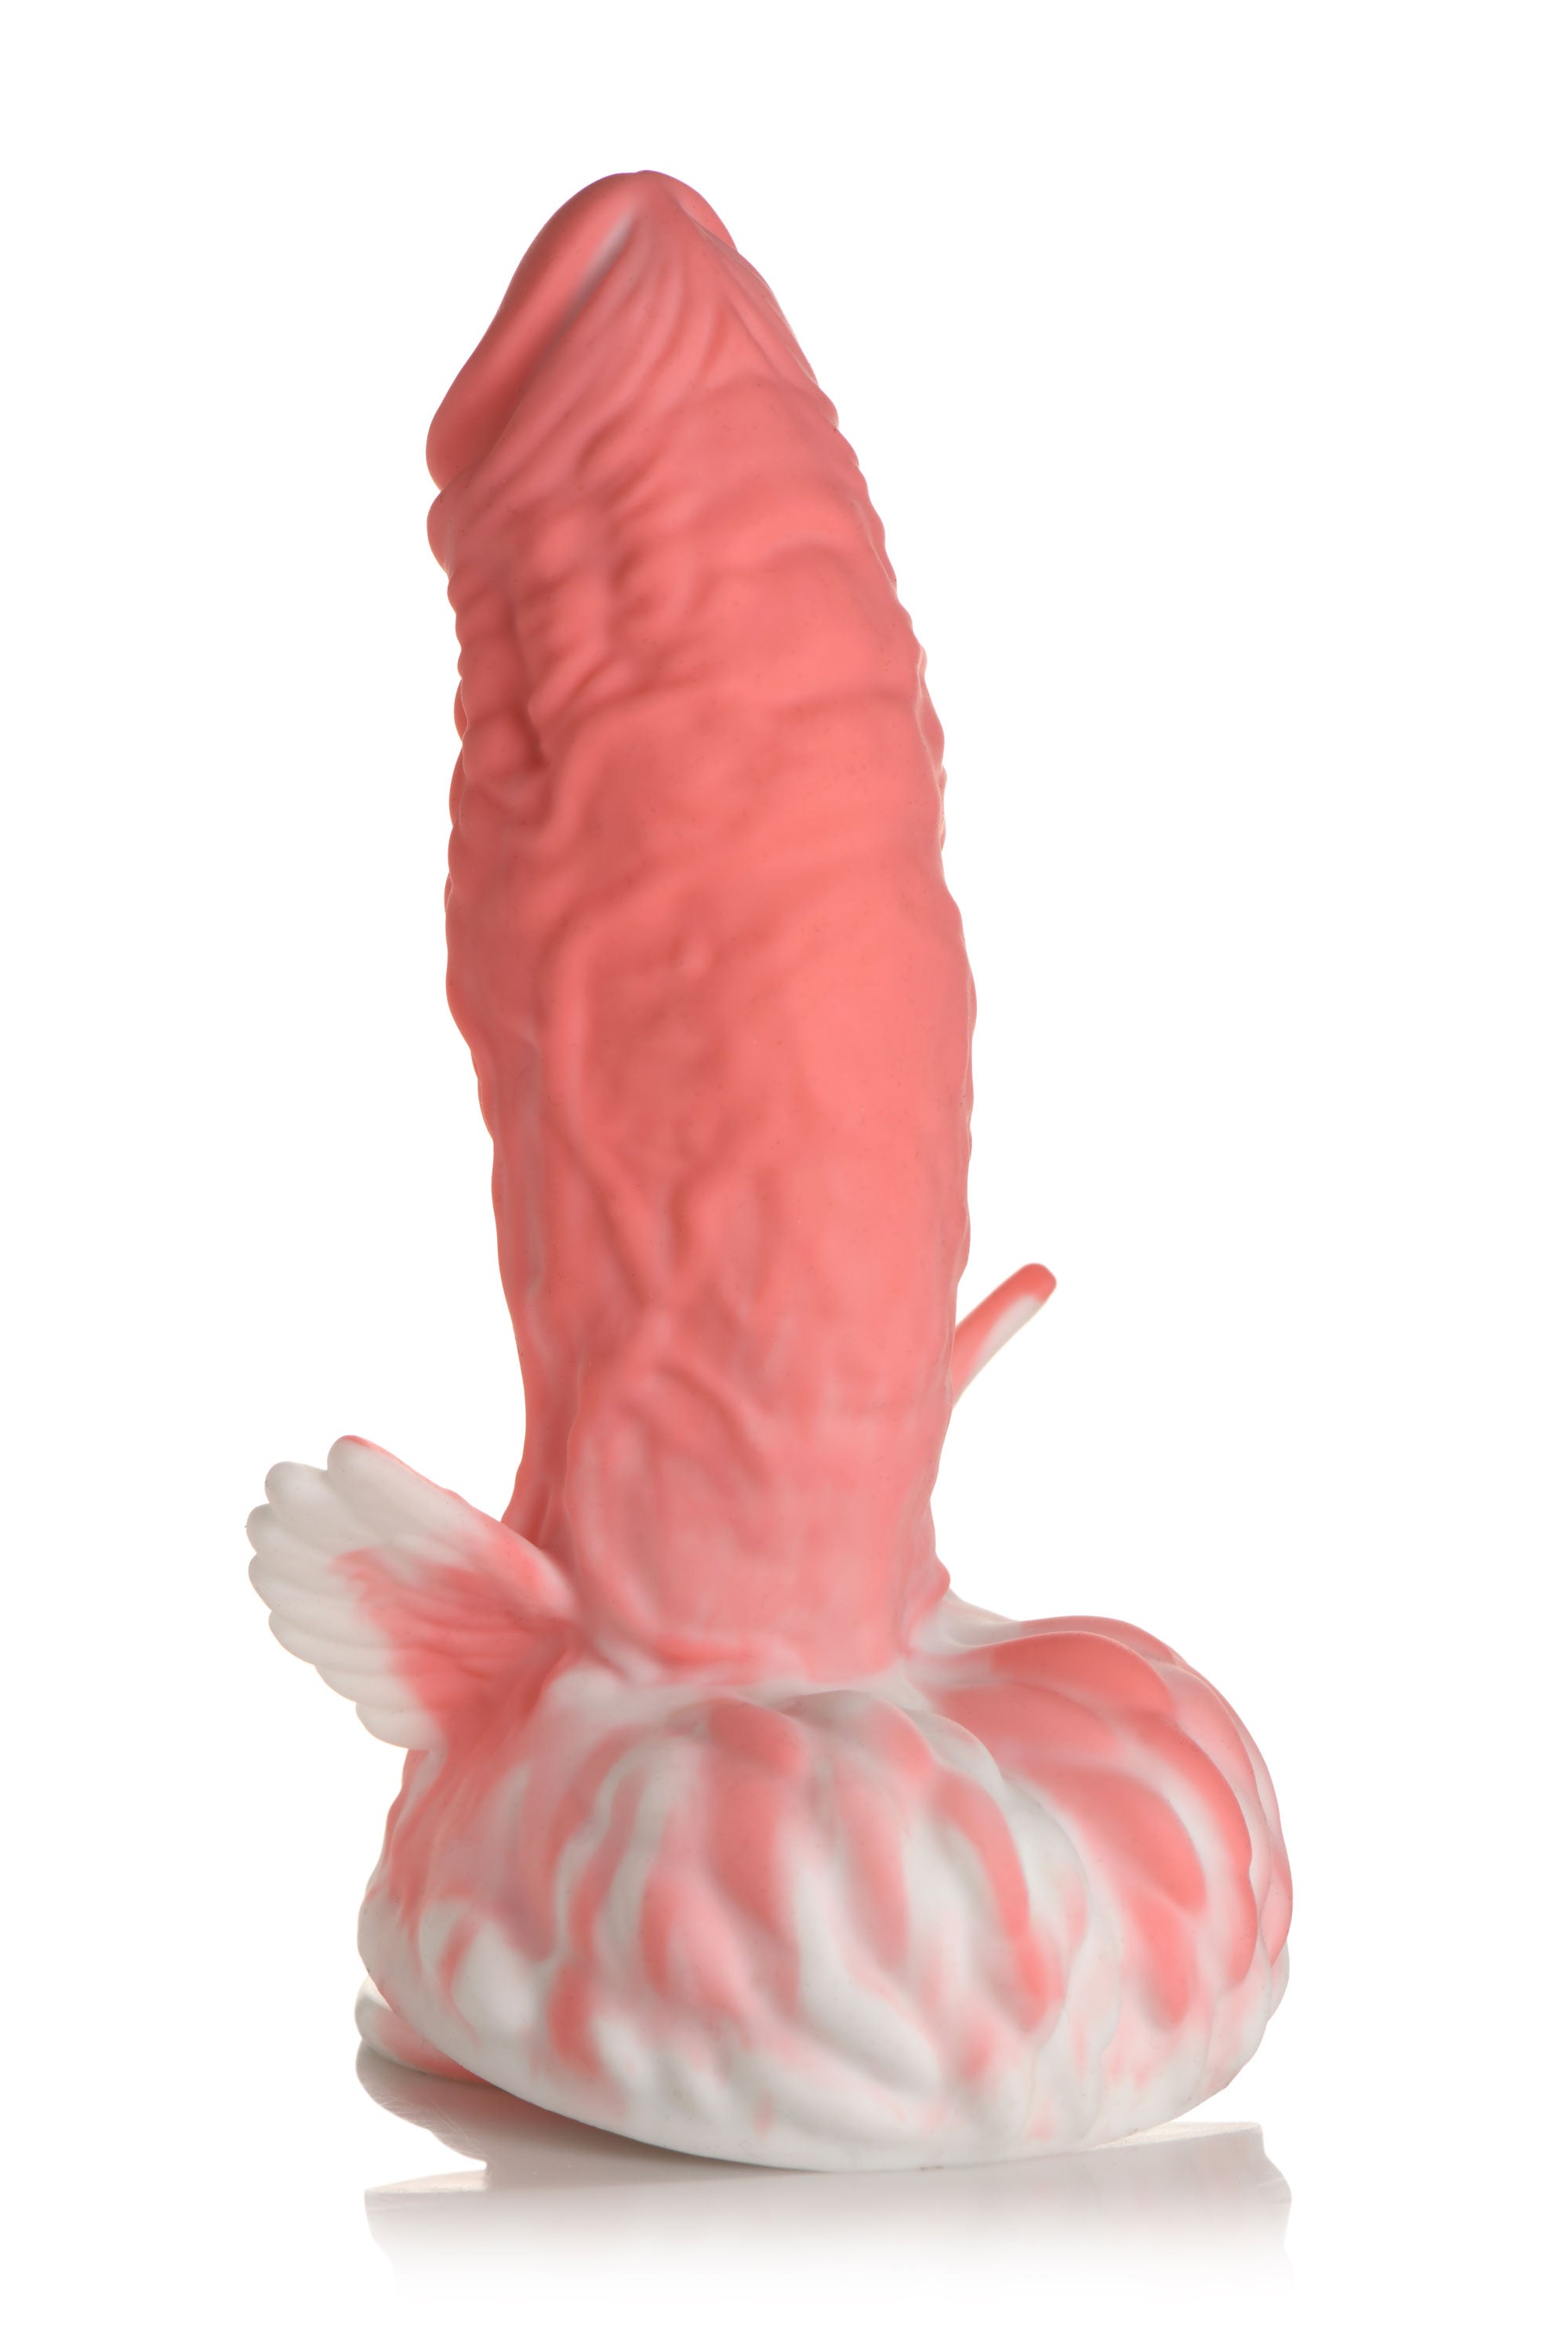 Pegasus Pecker Winged Silicone Dildo - Pink/white-2